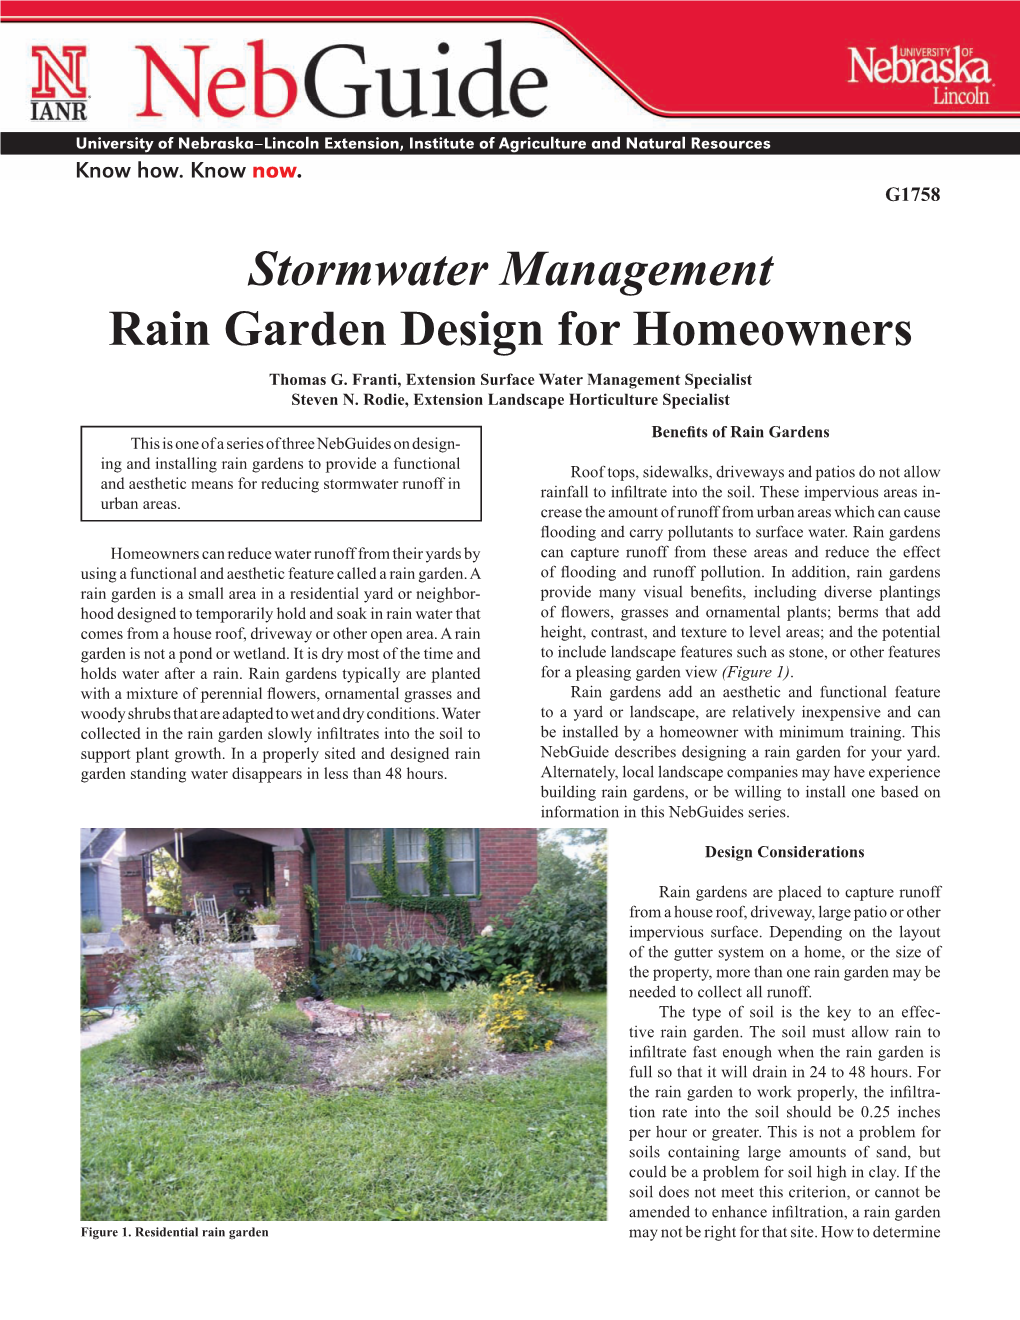 Stormwater Management Rain Garden Design for Homeowners Thomas G